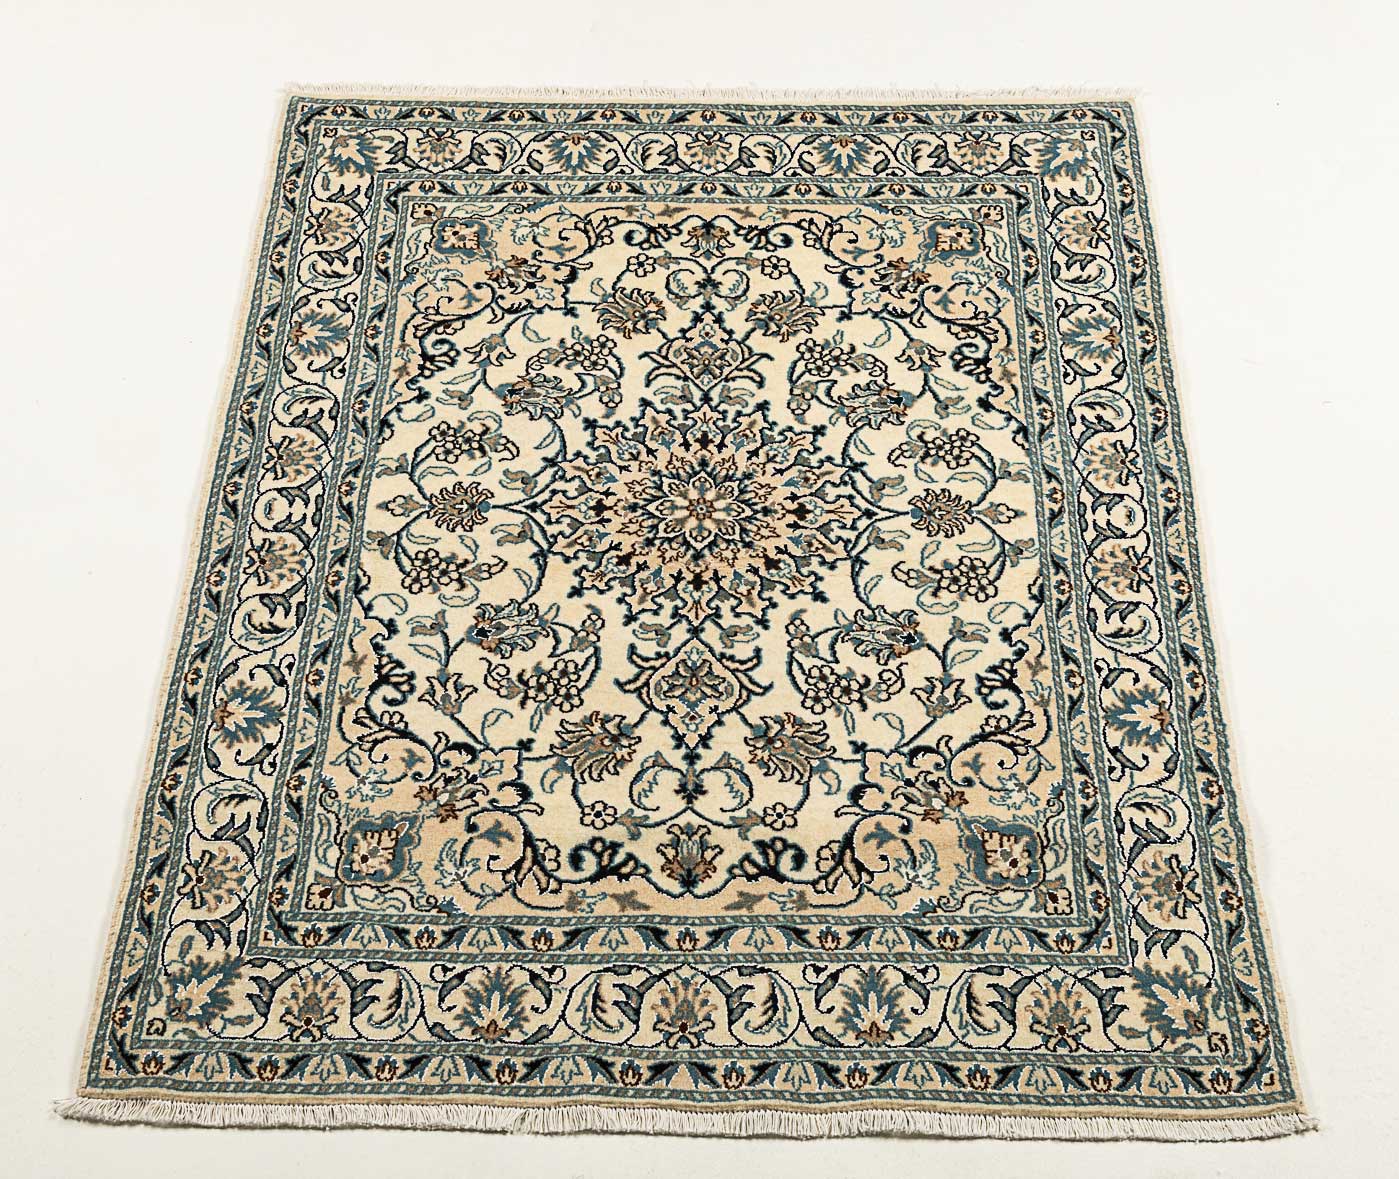 Authentic original hand knotted carpet 215x160 CM